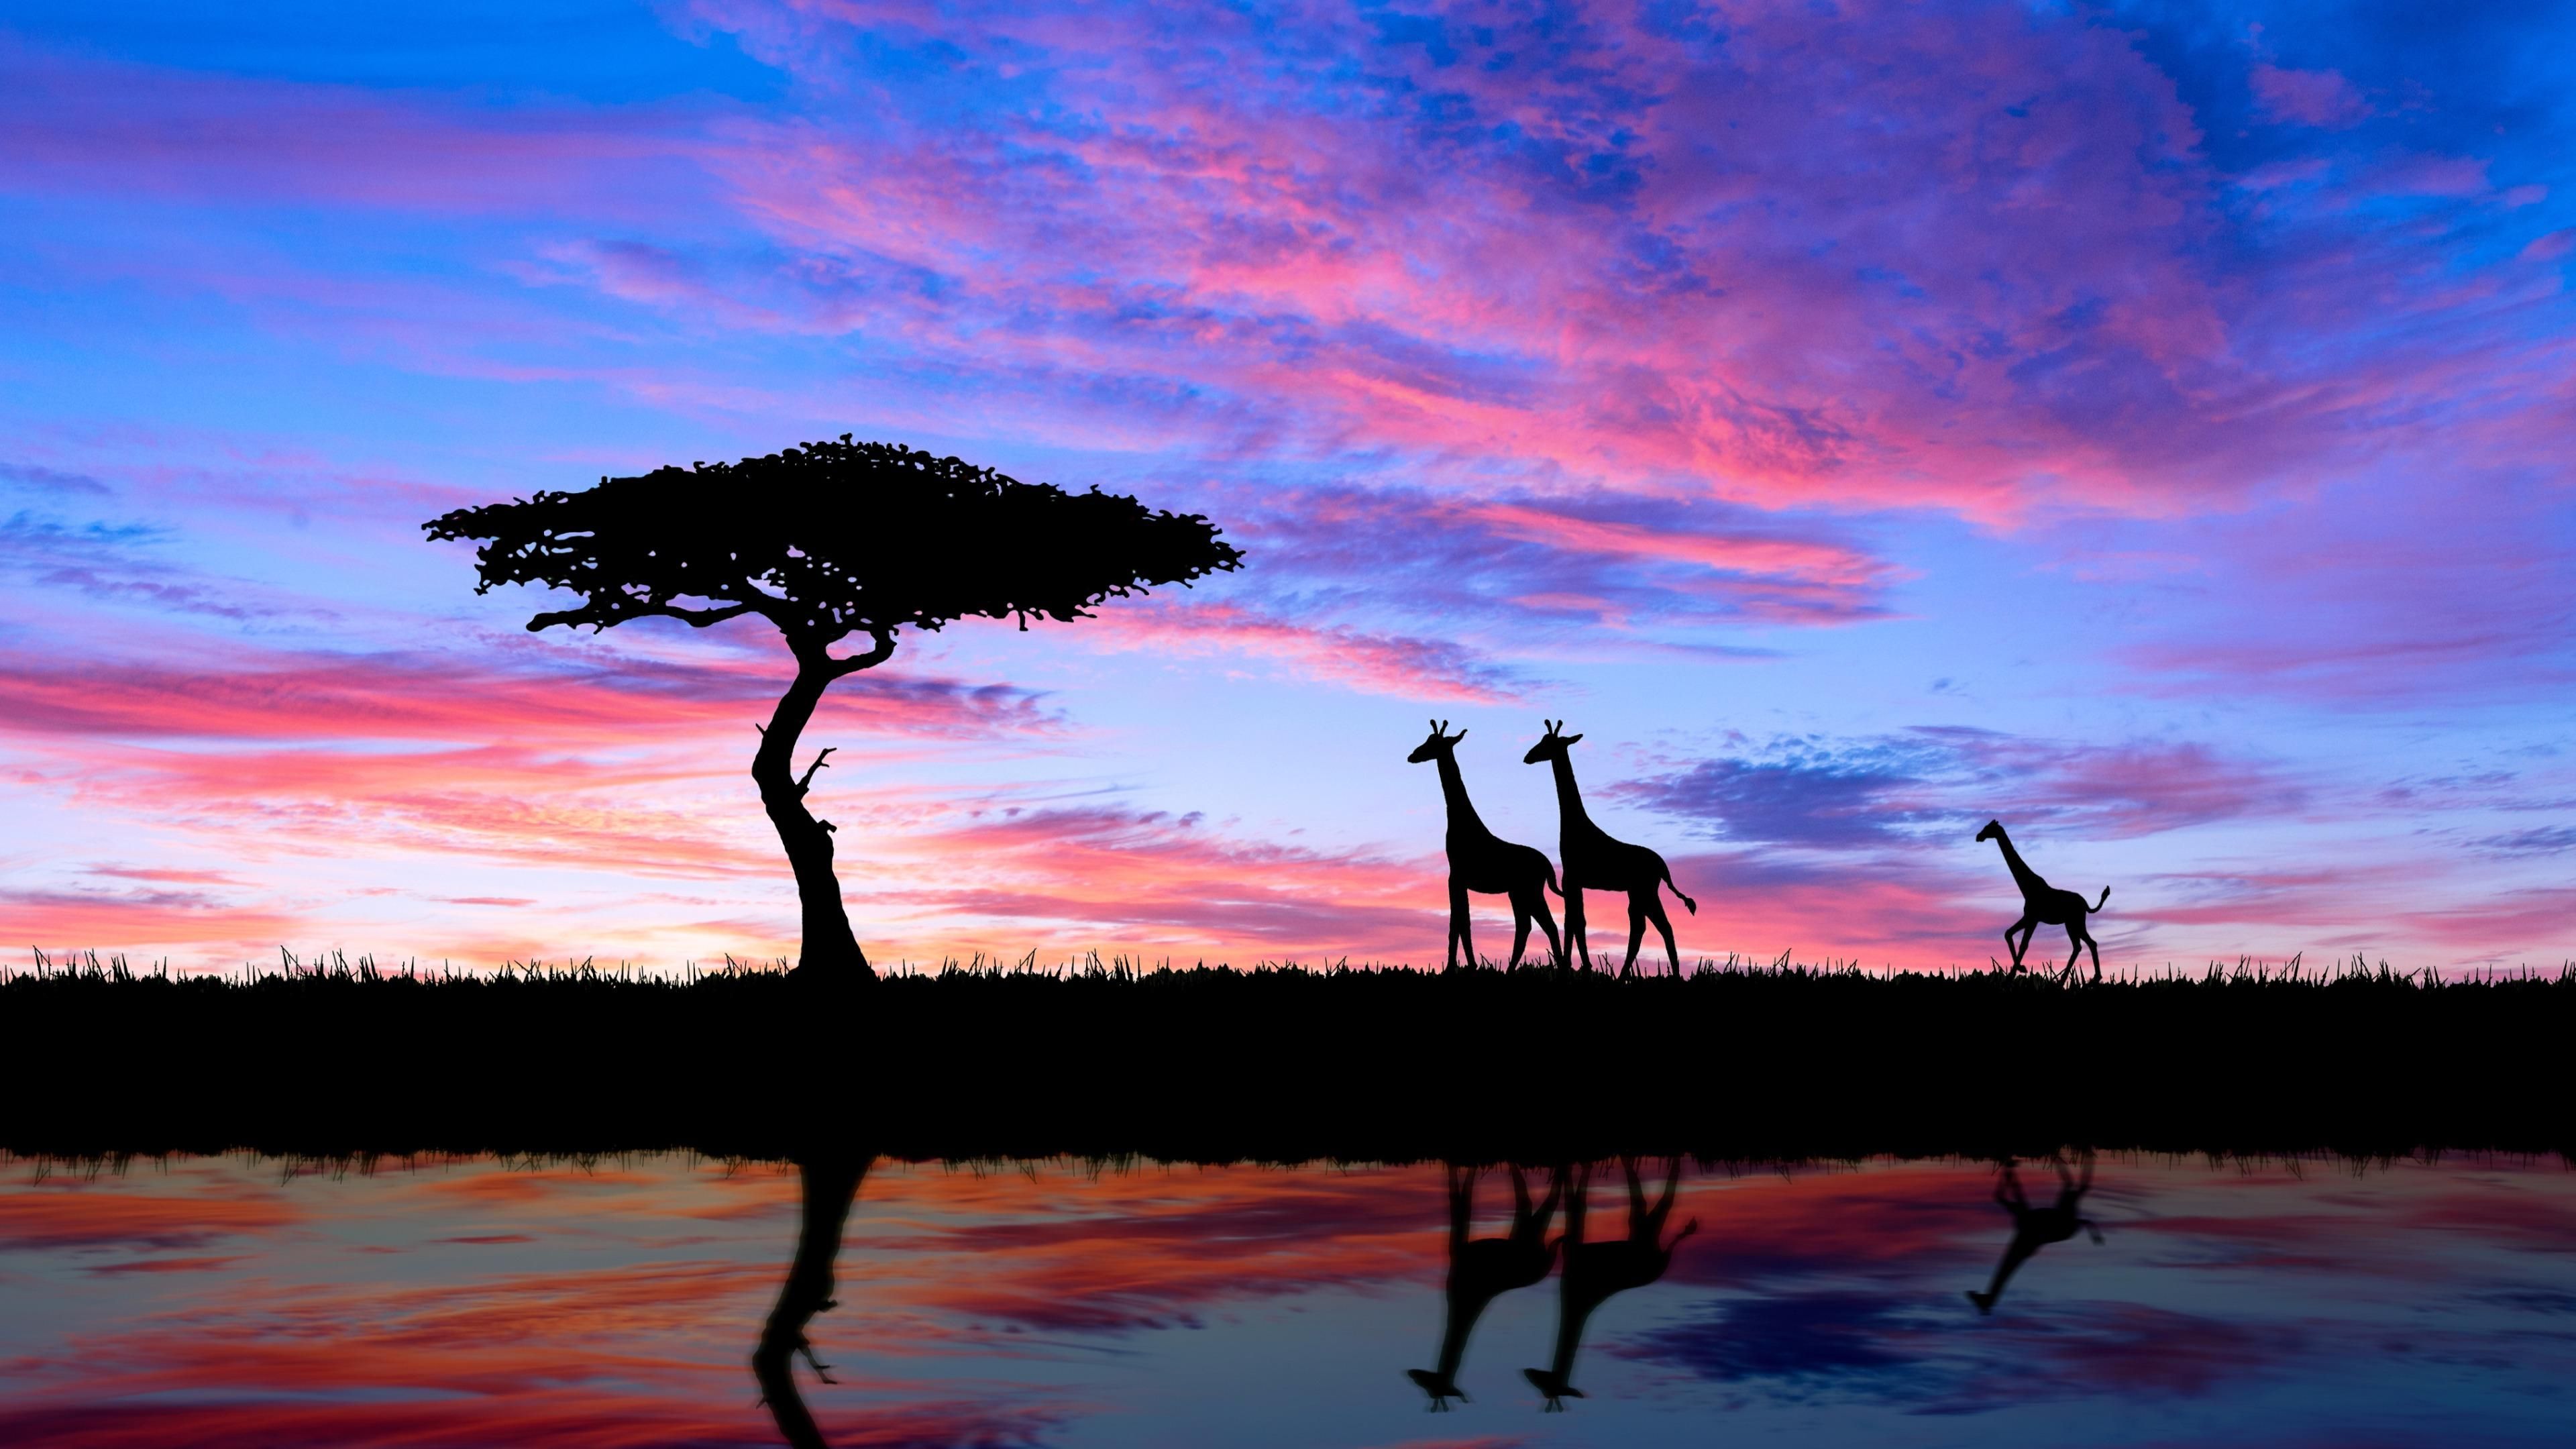 African Savanna Sunset Wallpaper. Sunset wallpaper, African sunset, Sunset landscape